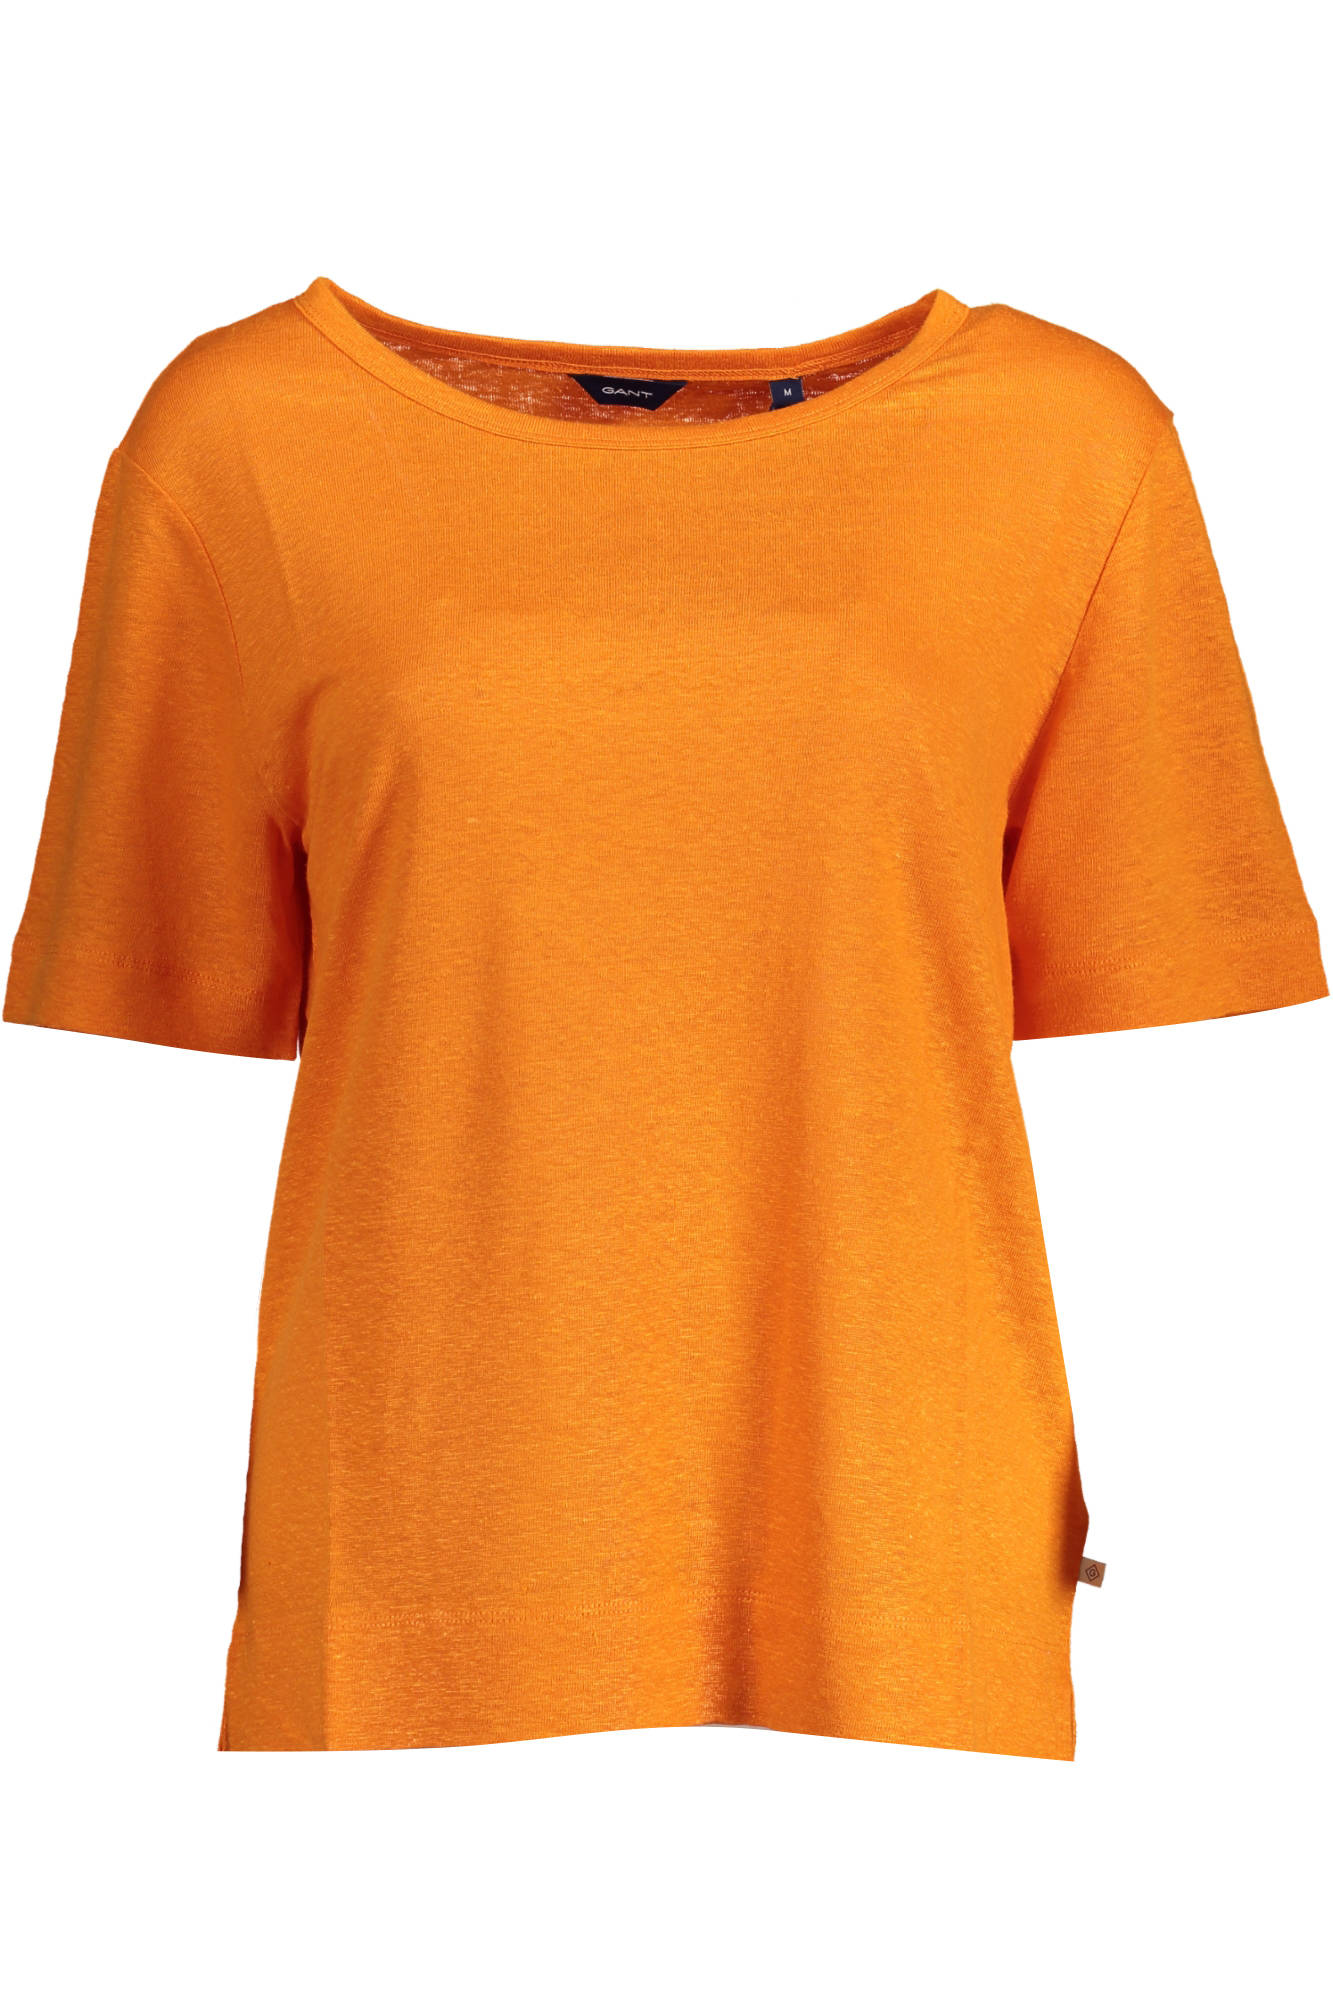 Orange Tops & T-Shirt